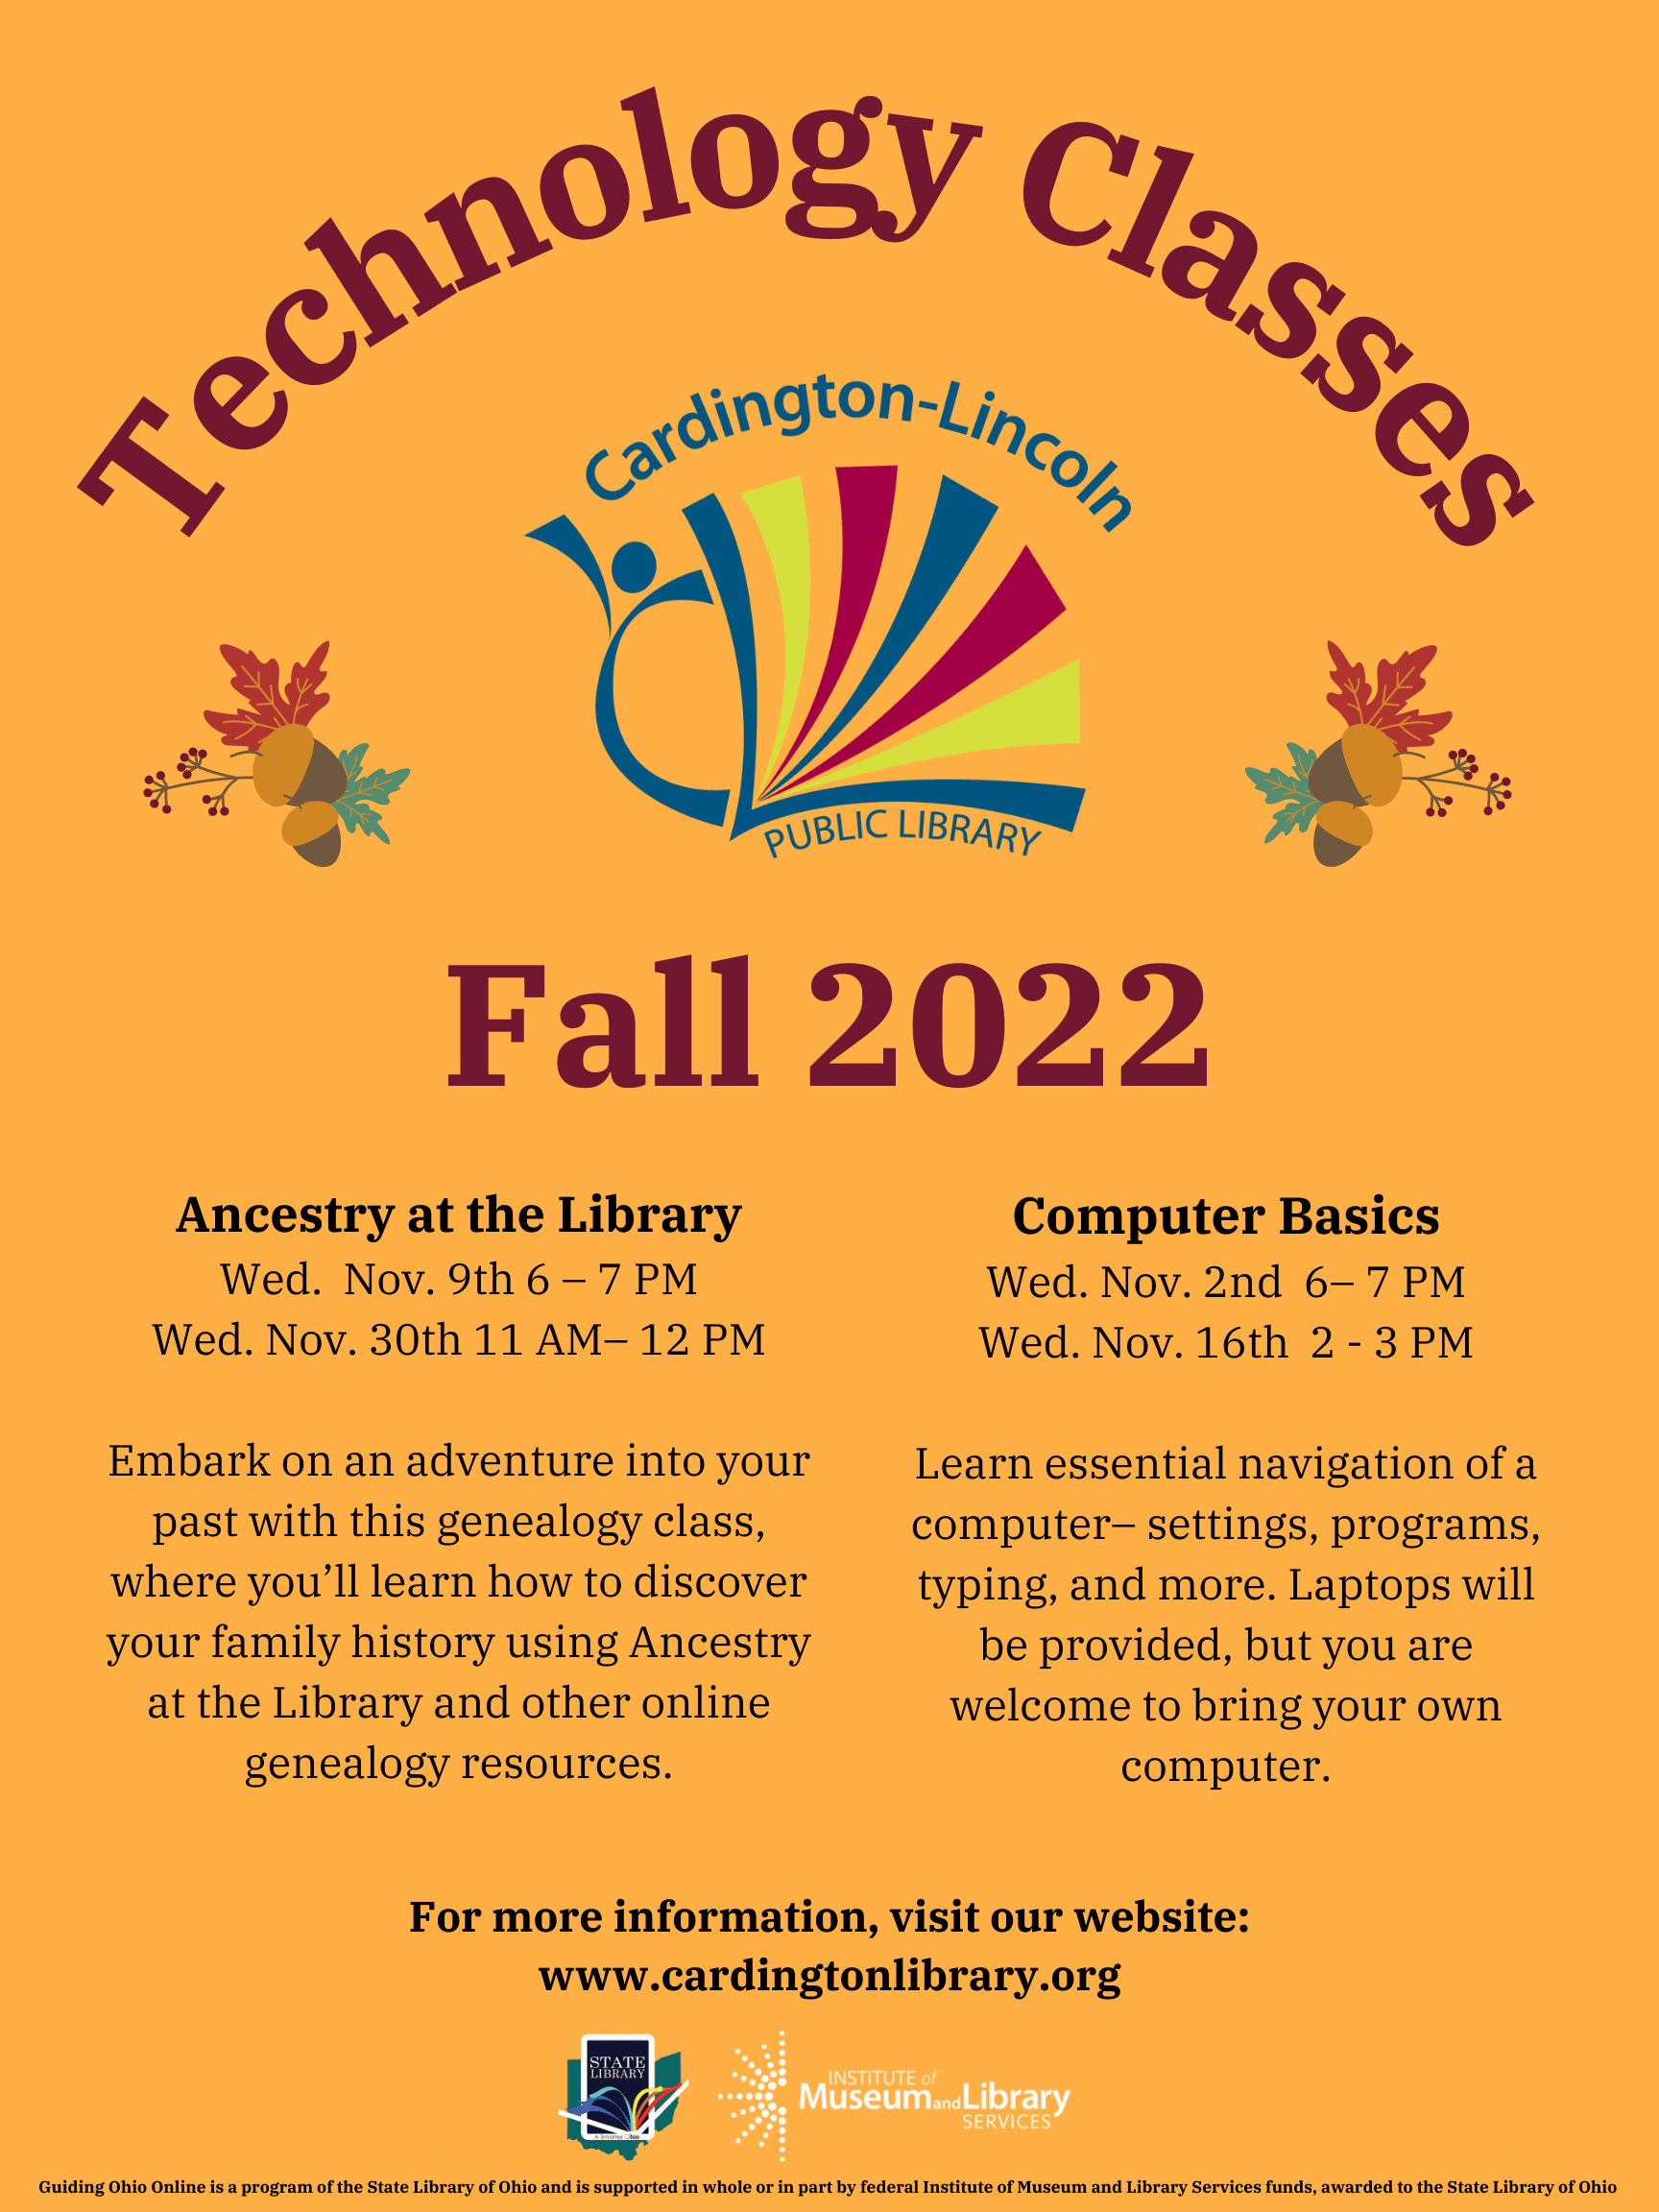 Fall 2022 Technology Classes CardingtonLincoln Public Library